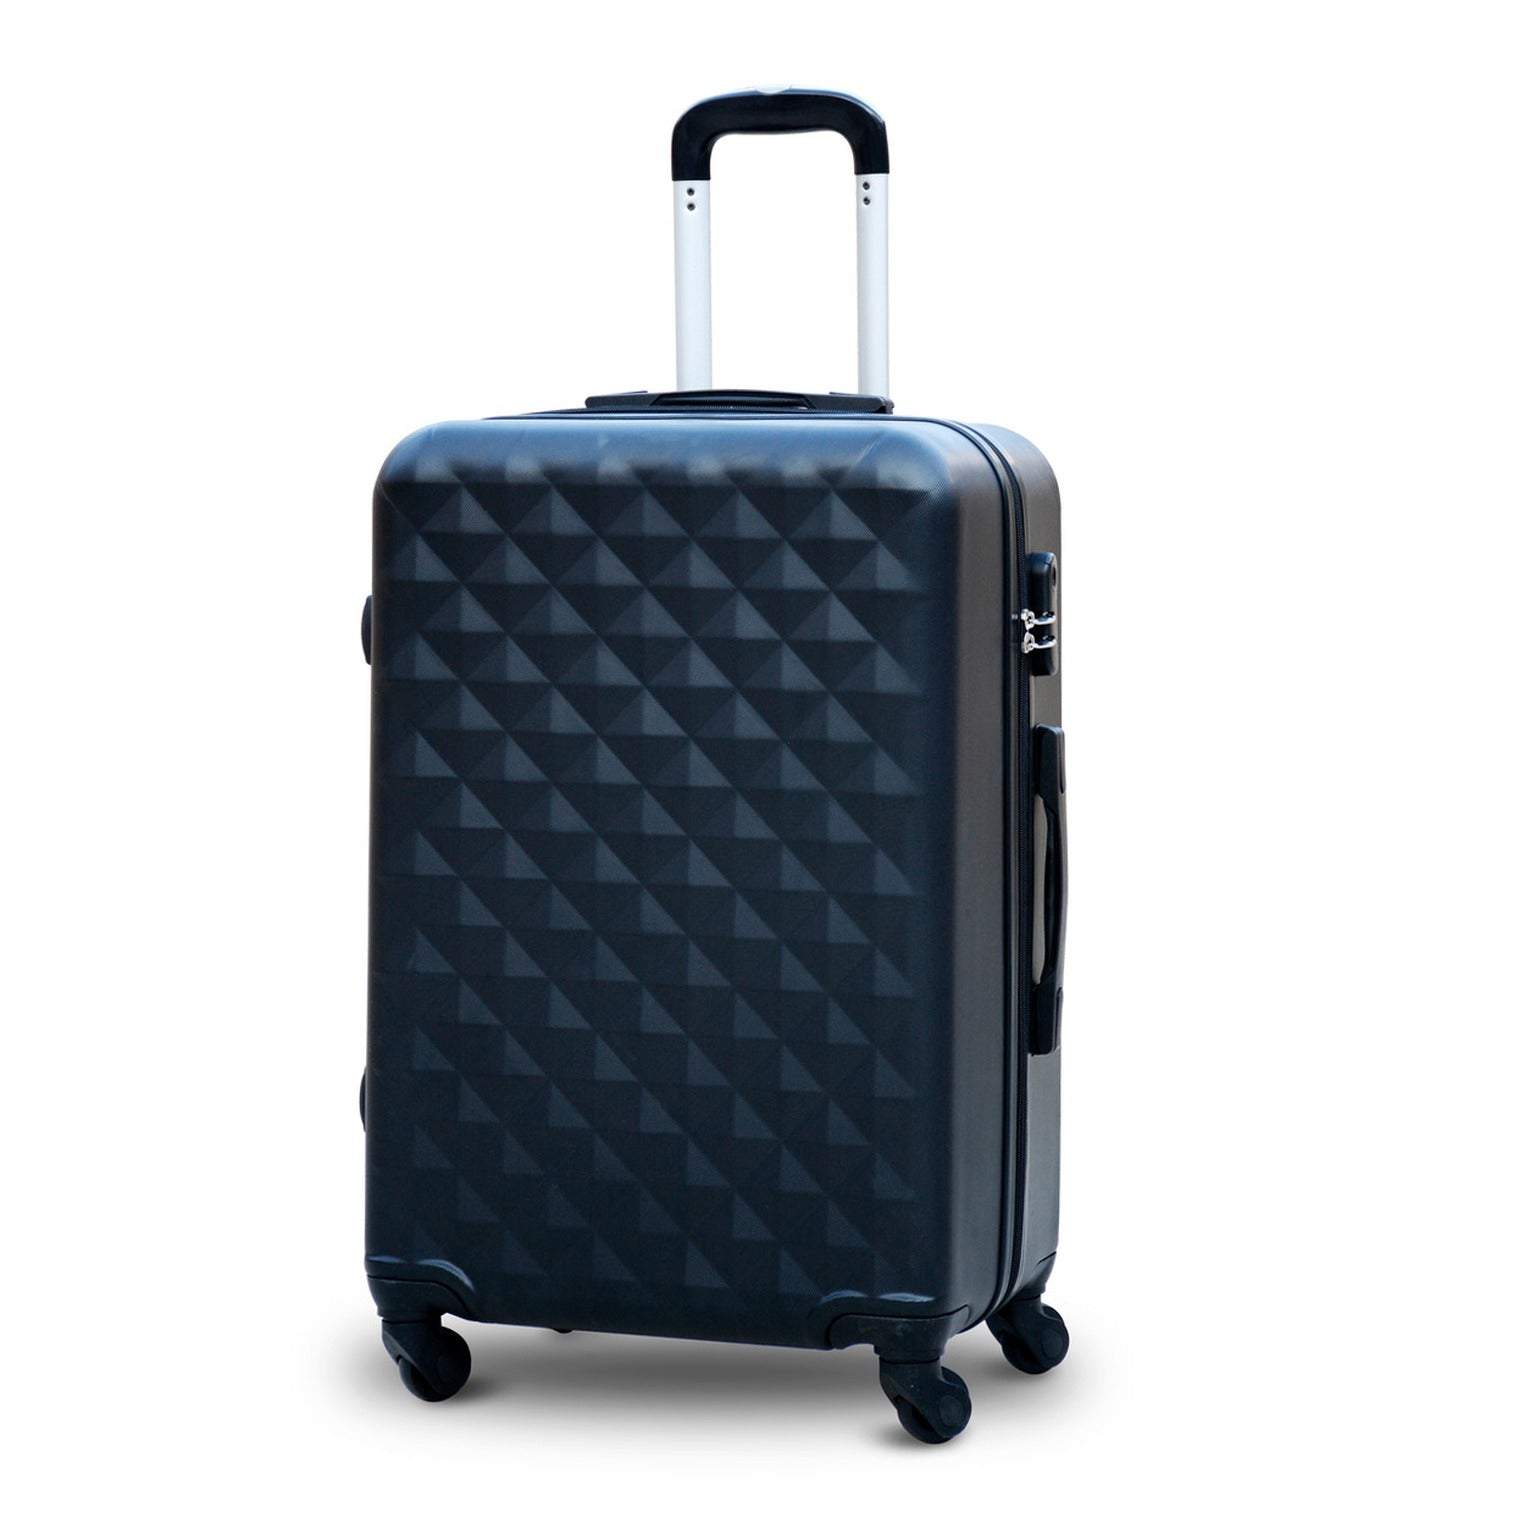 24" Black Colour Diamond Cut ABS Luggage Lightweight Hard Case Trolley Bag Zaappy.com